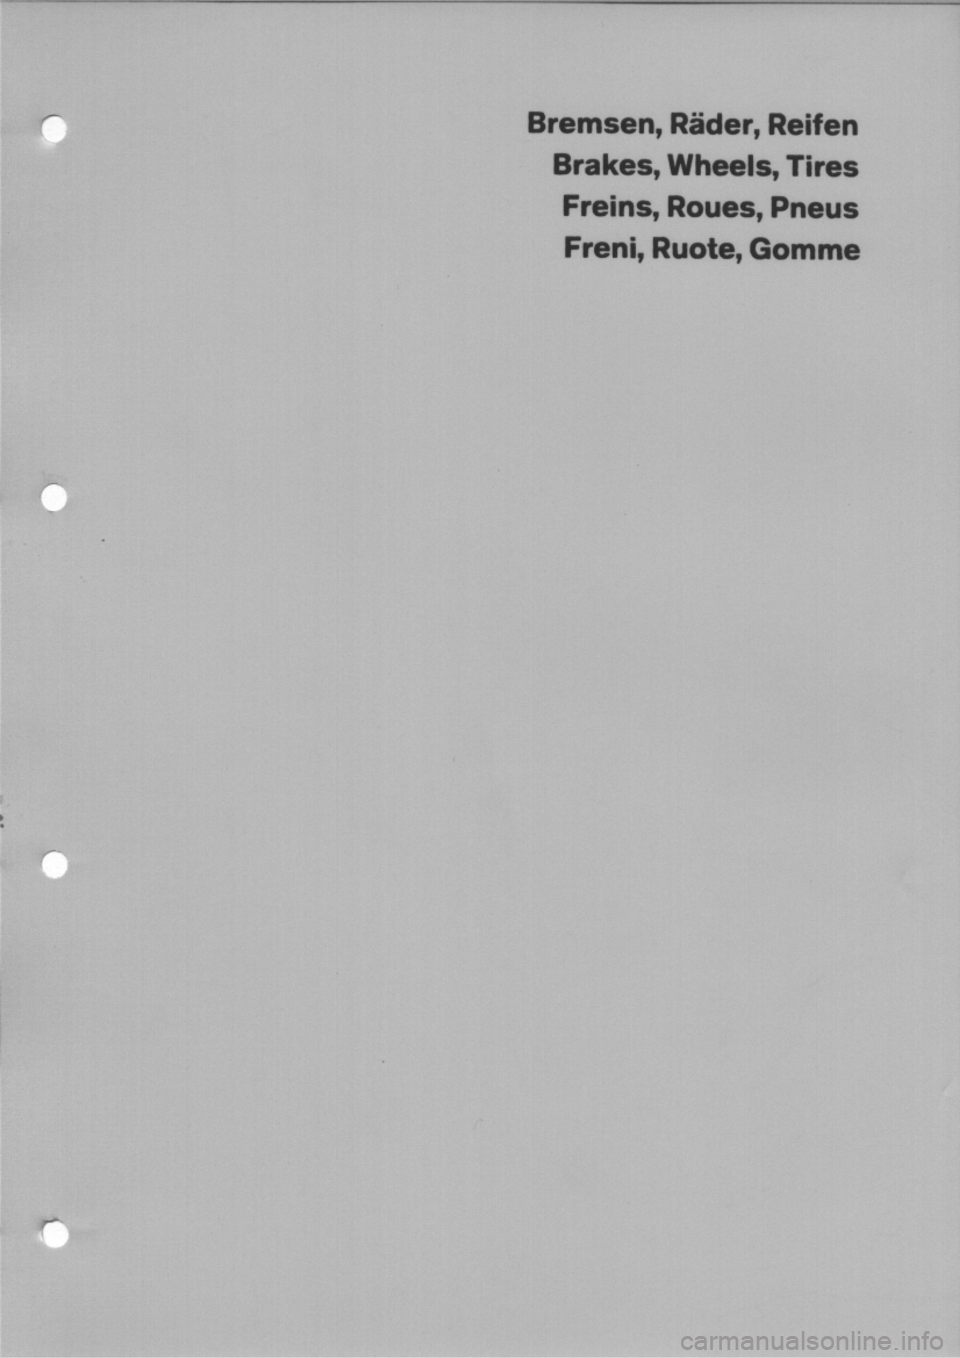 PORSCHE 914 1972 1.G Brakes Workshop Manual 